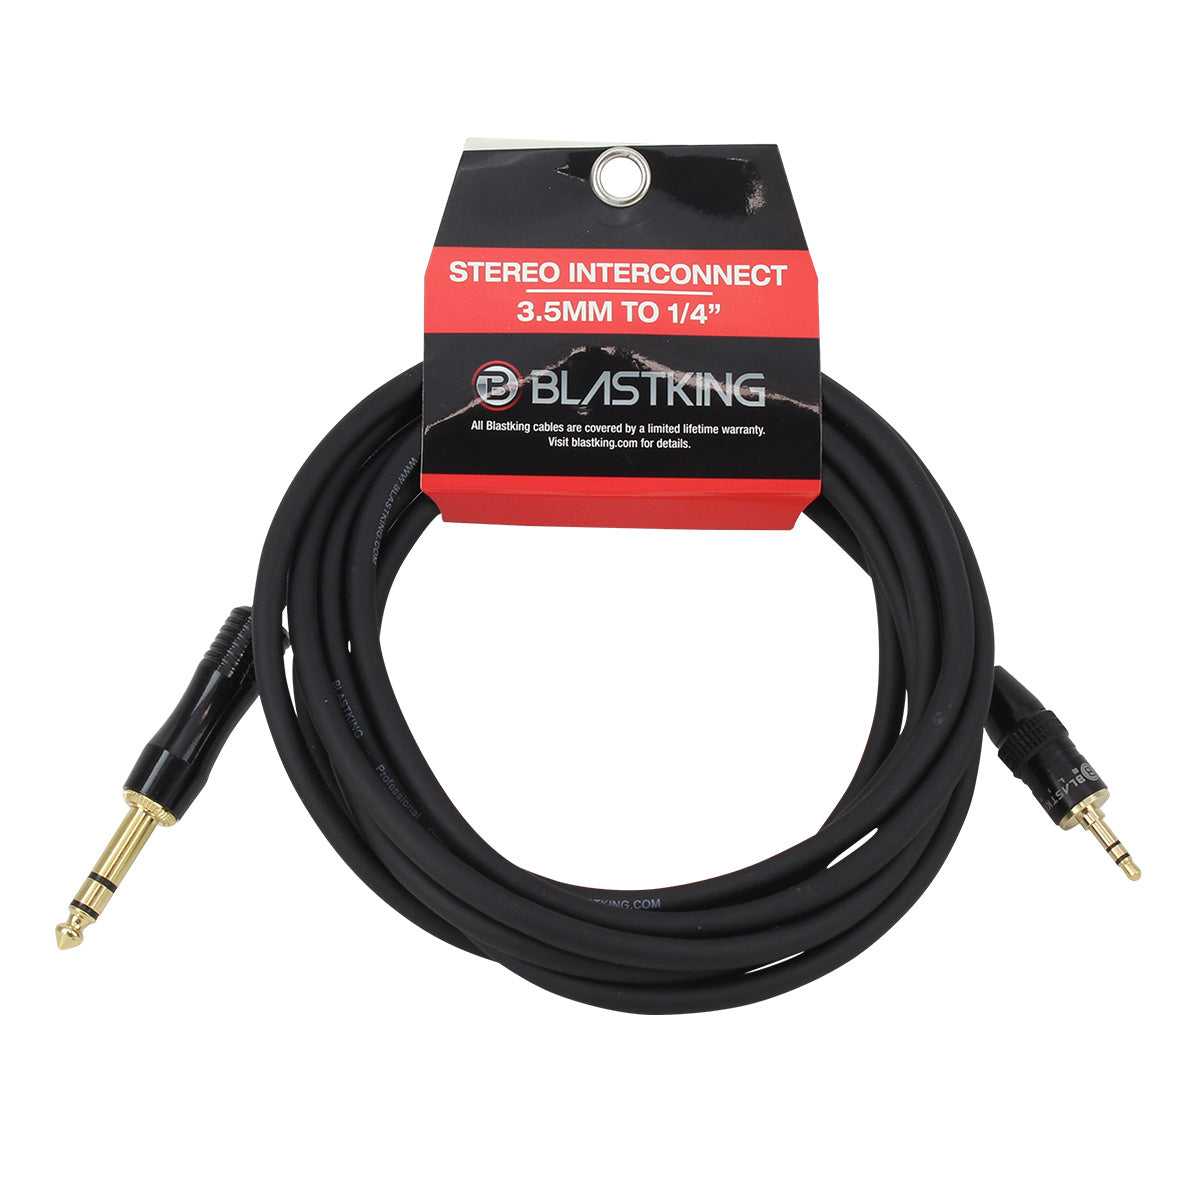 Blastking CQ35B-6 Stereo Interconnect 3.5mm to 1/4" - 6 Ft